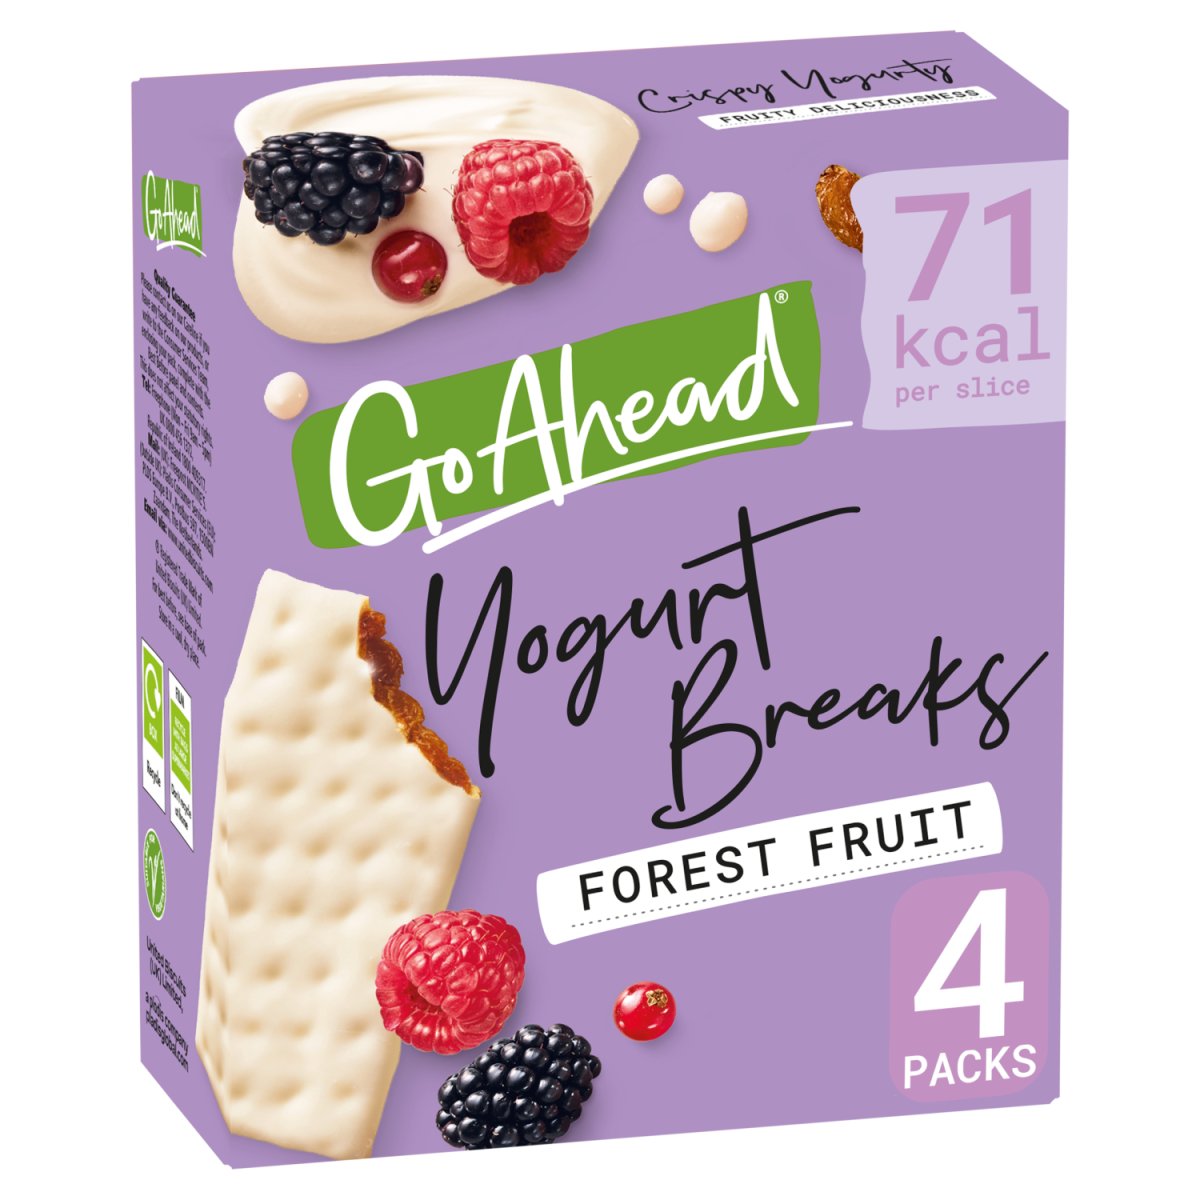 Go Ahead Forest Fruit Yogurt Breaks 4pk 9x4x35.5g - Intamarque - Wholesale 5000168038070